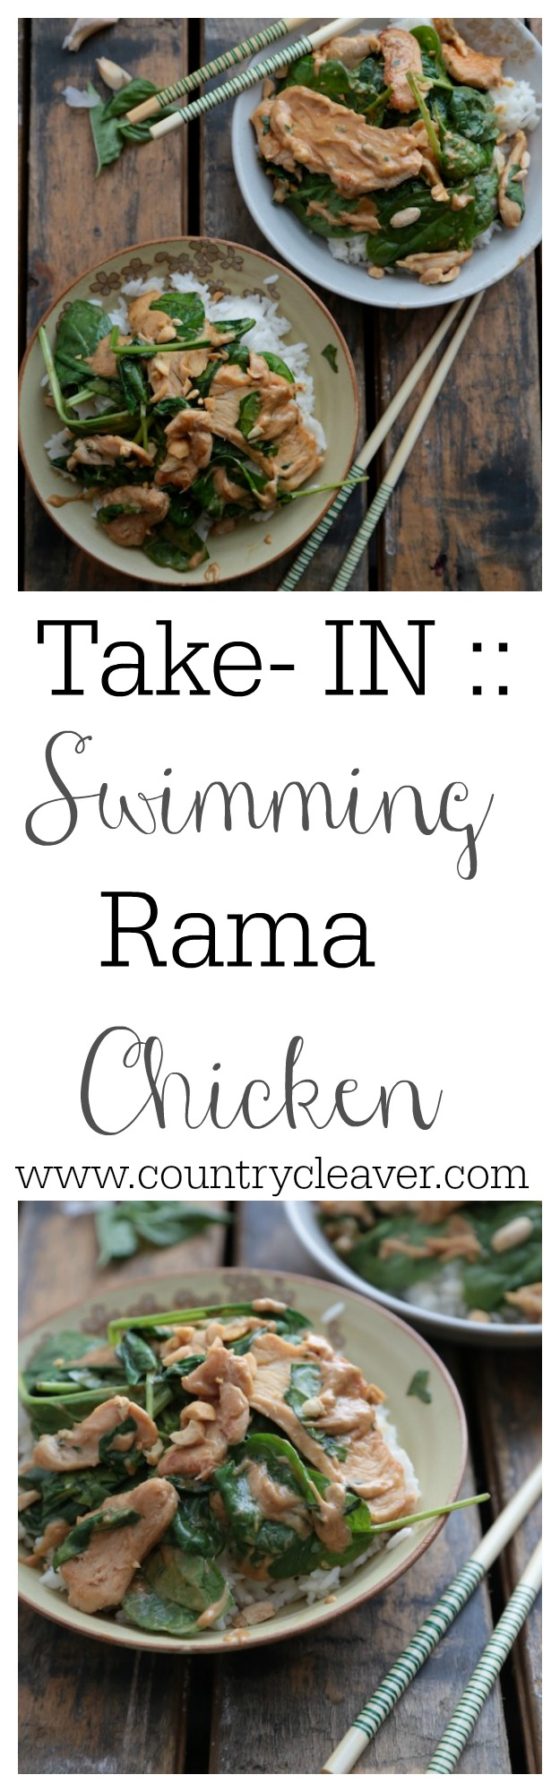 Take-IN Swimming in Rama Chicken